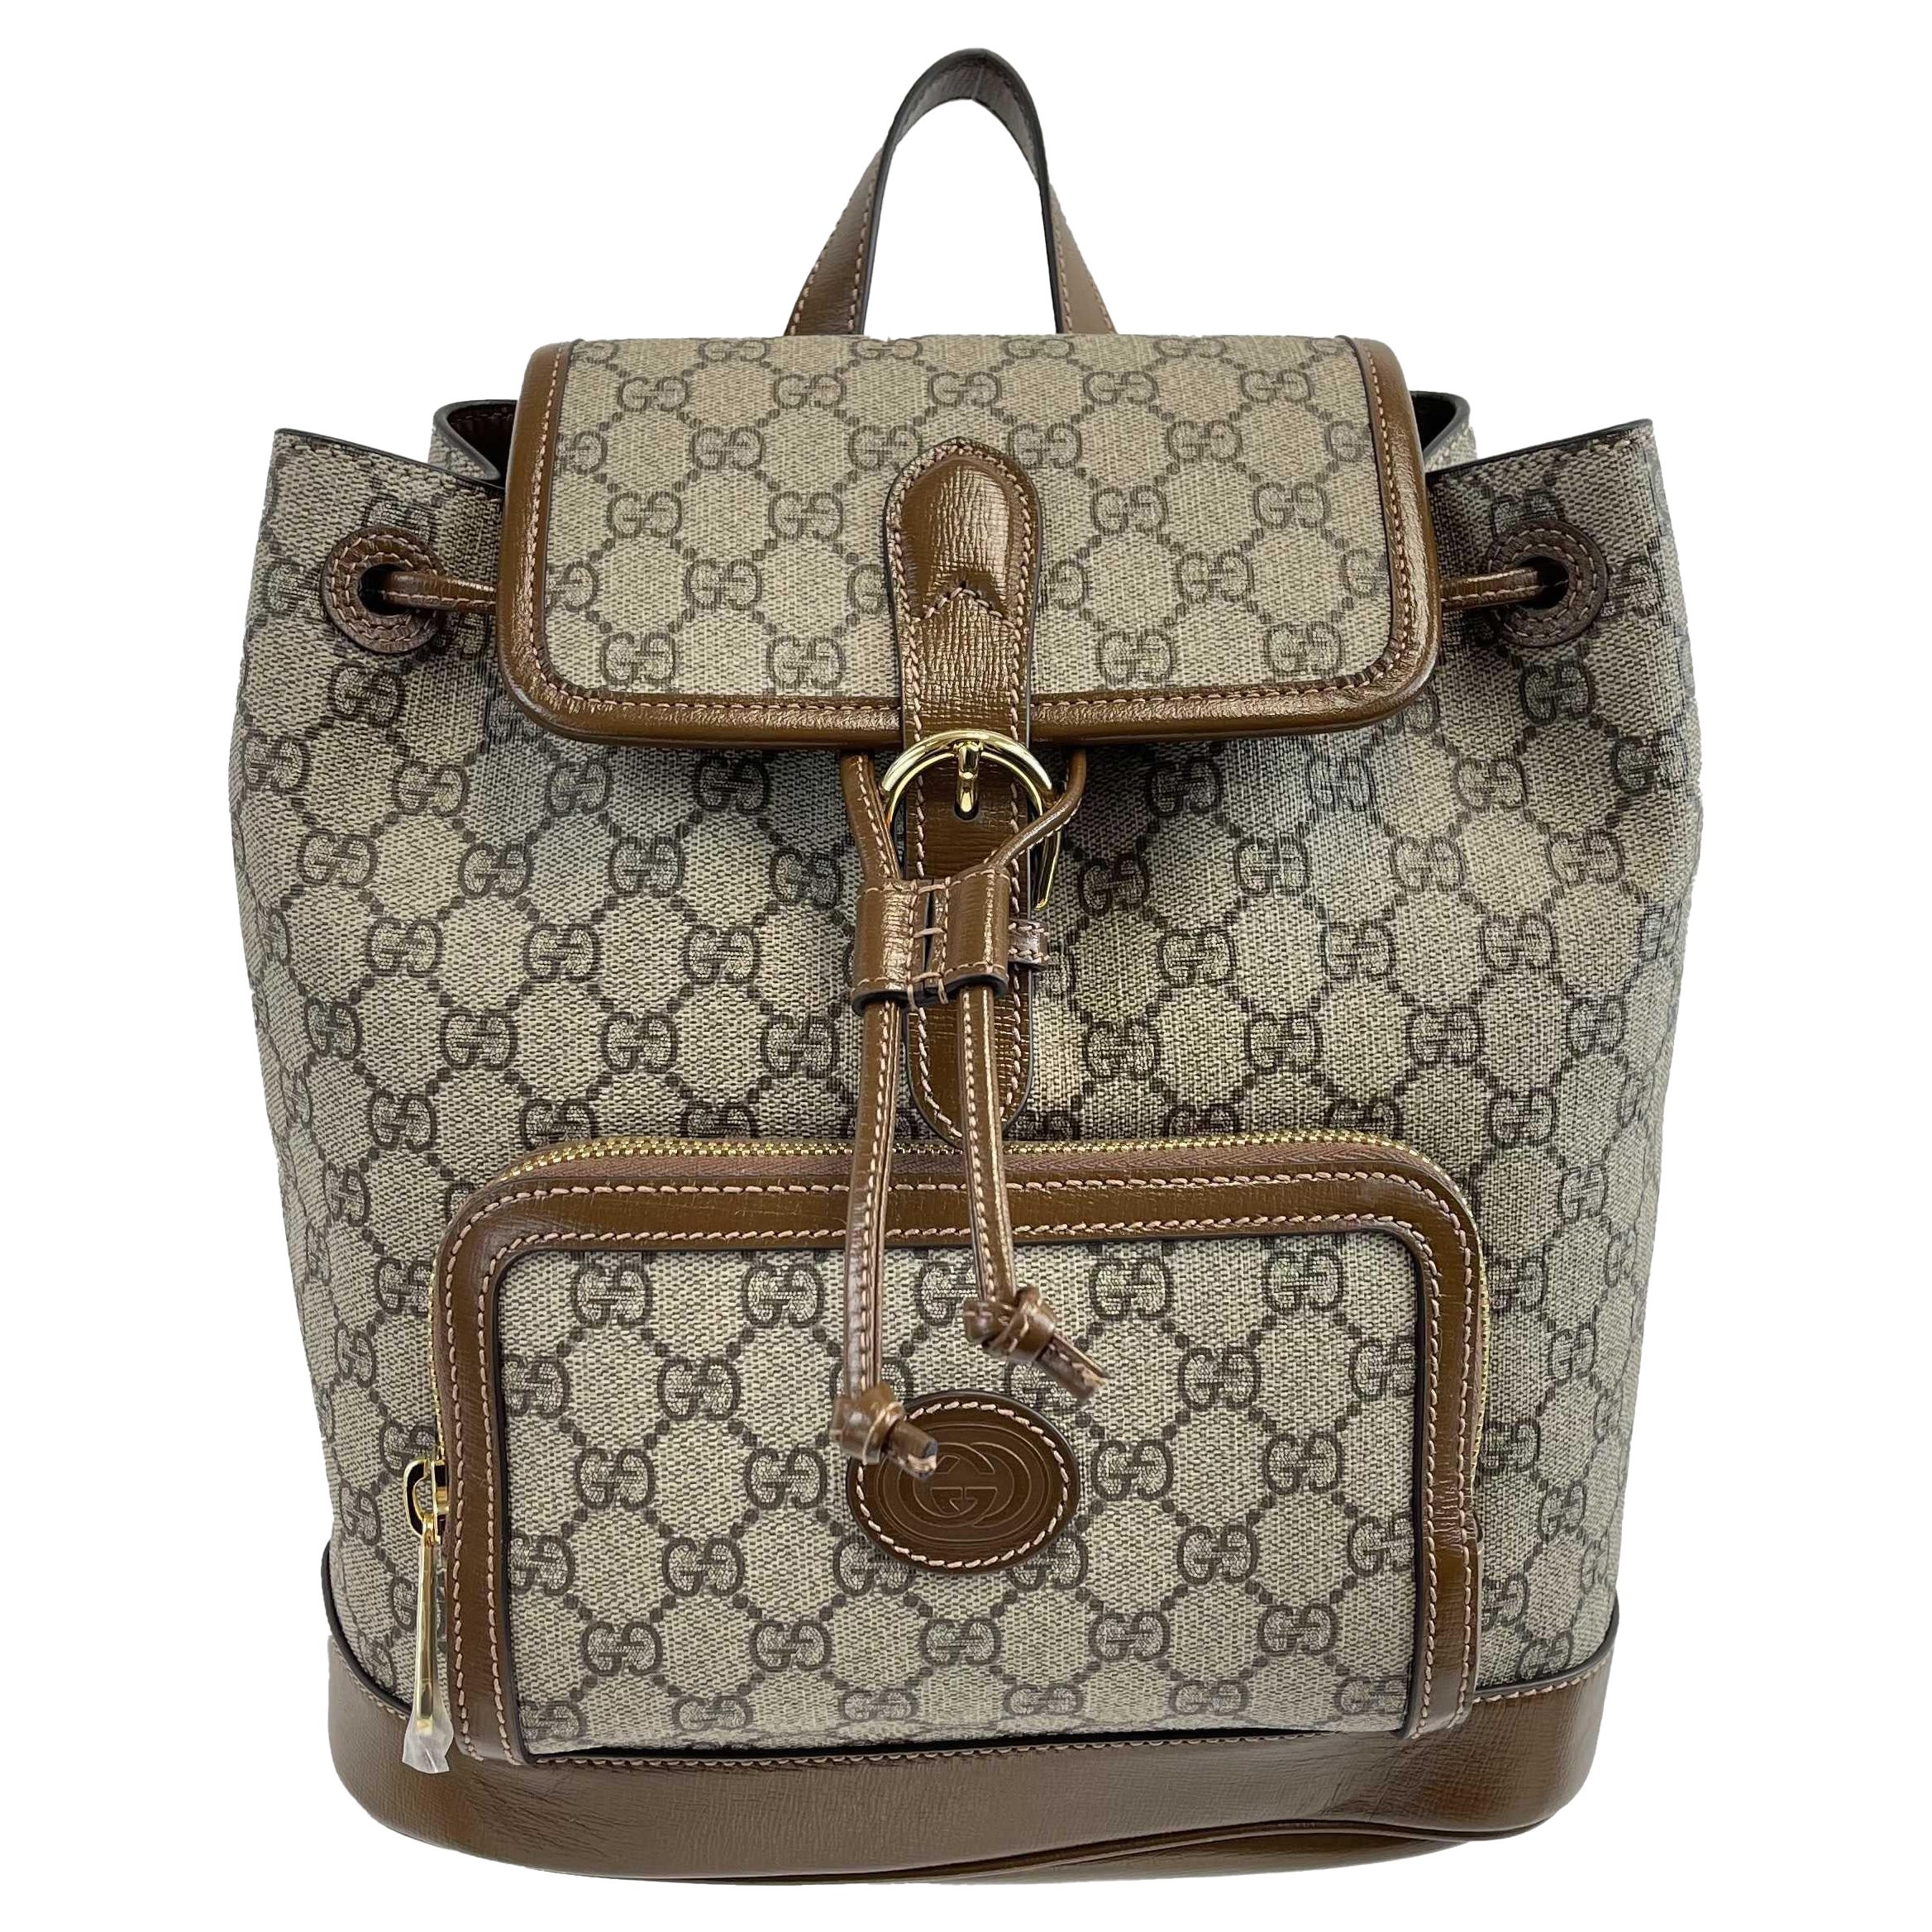 Gucci - NEW Backpack With Interlocking G - Beige / Brown Monogram Backpack